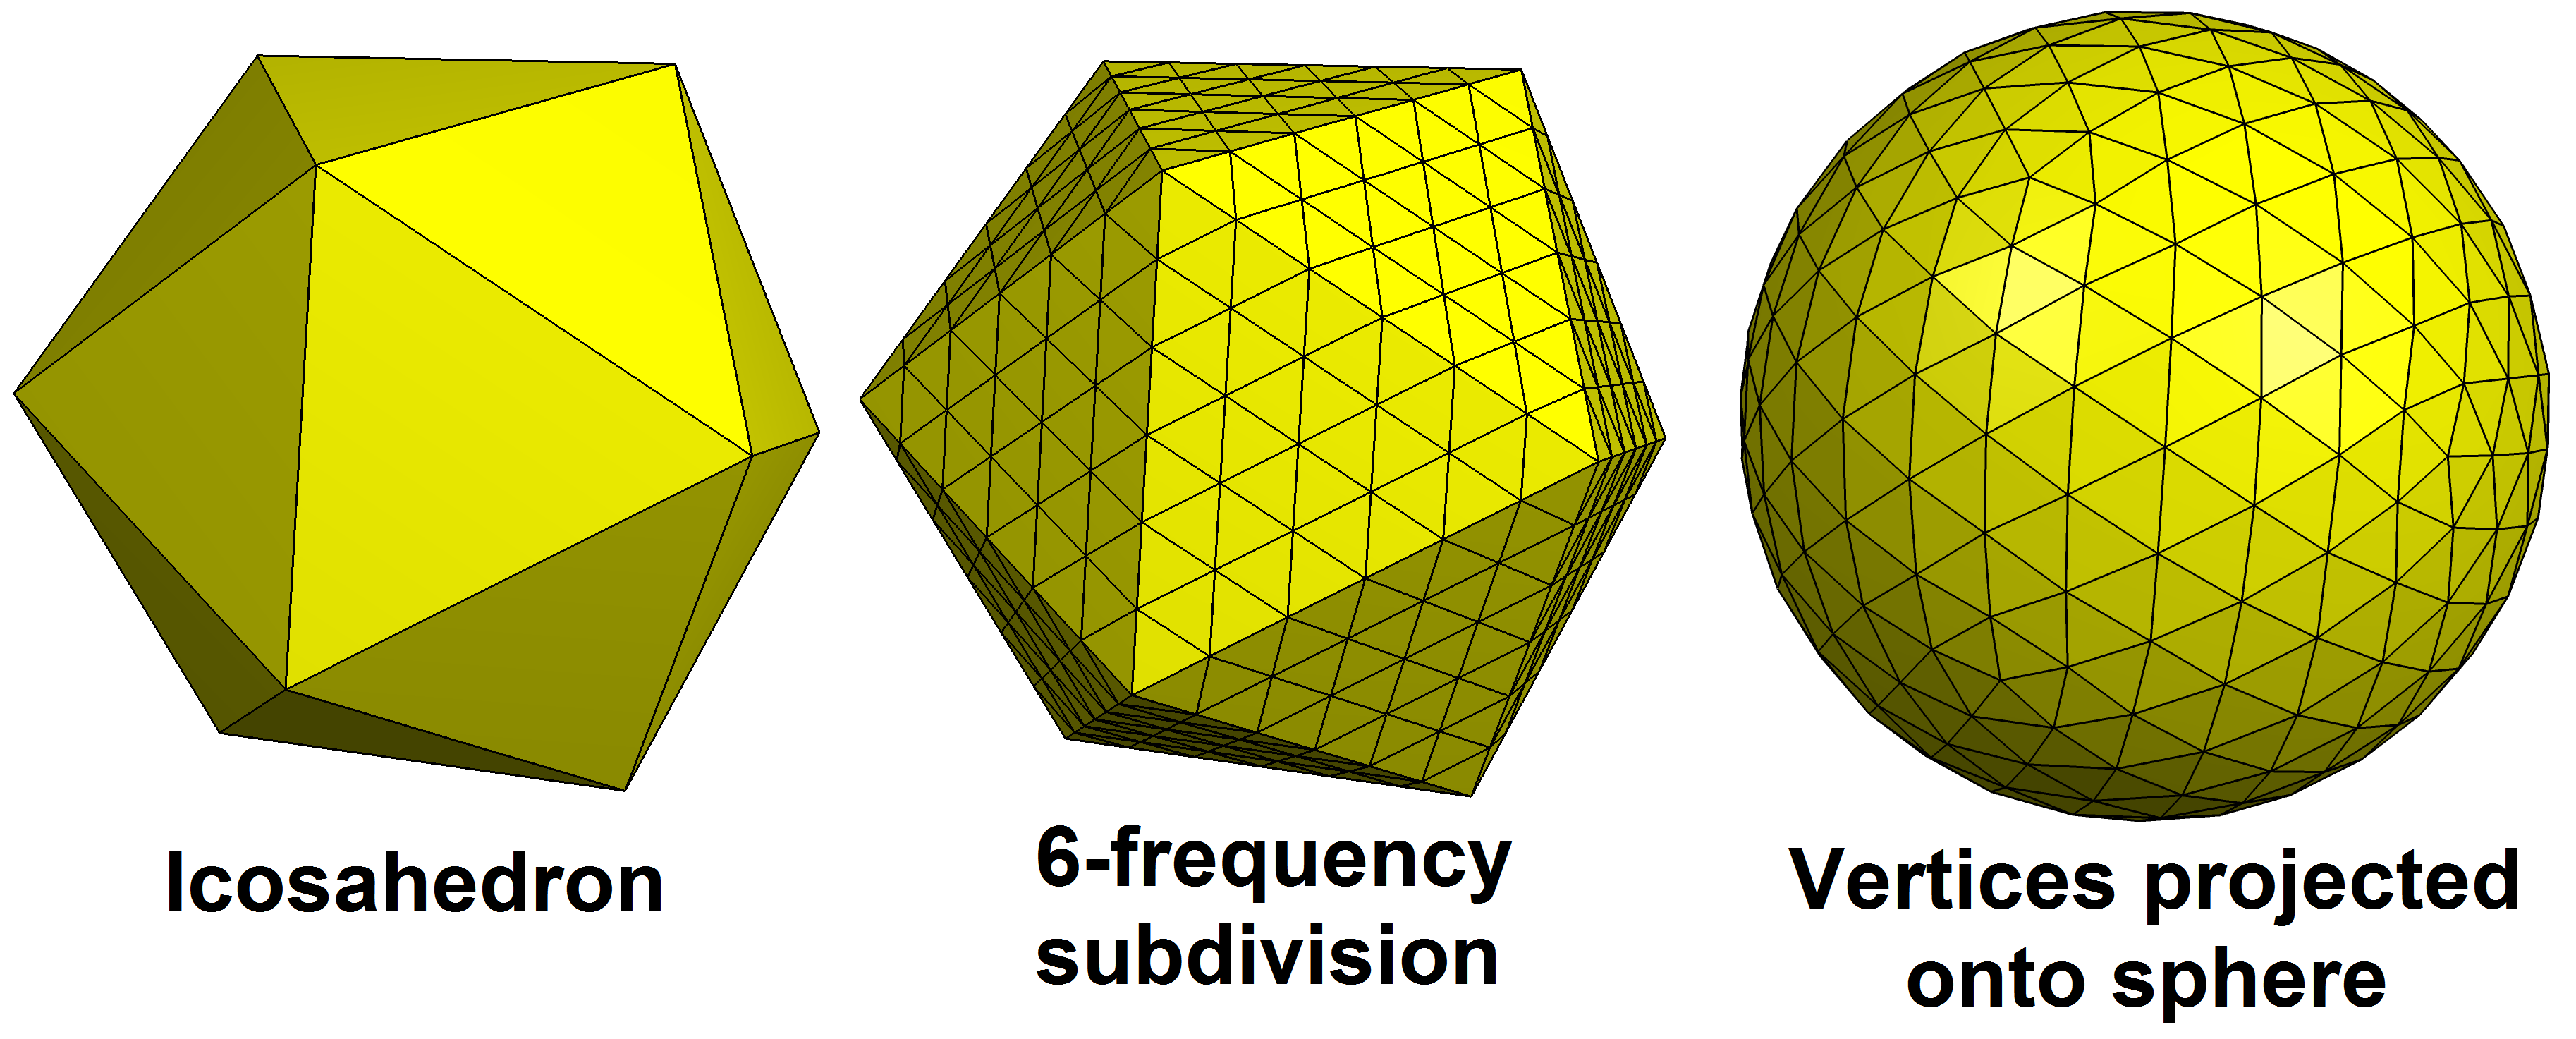 Subdivided icosahedron